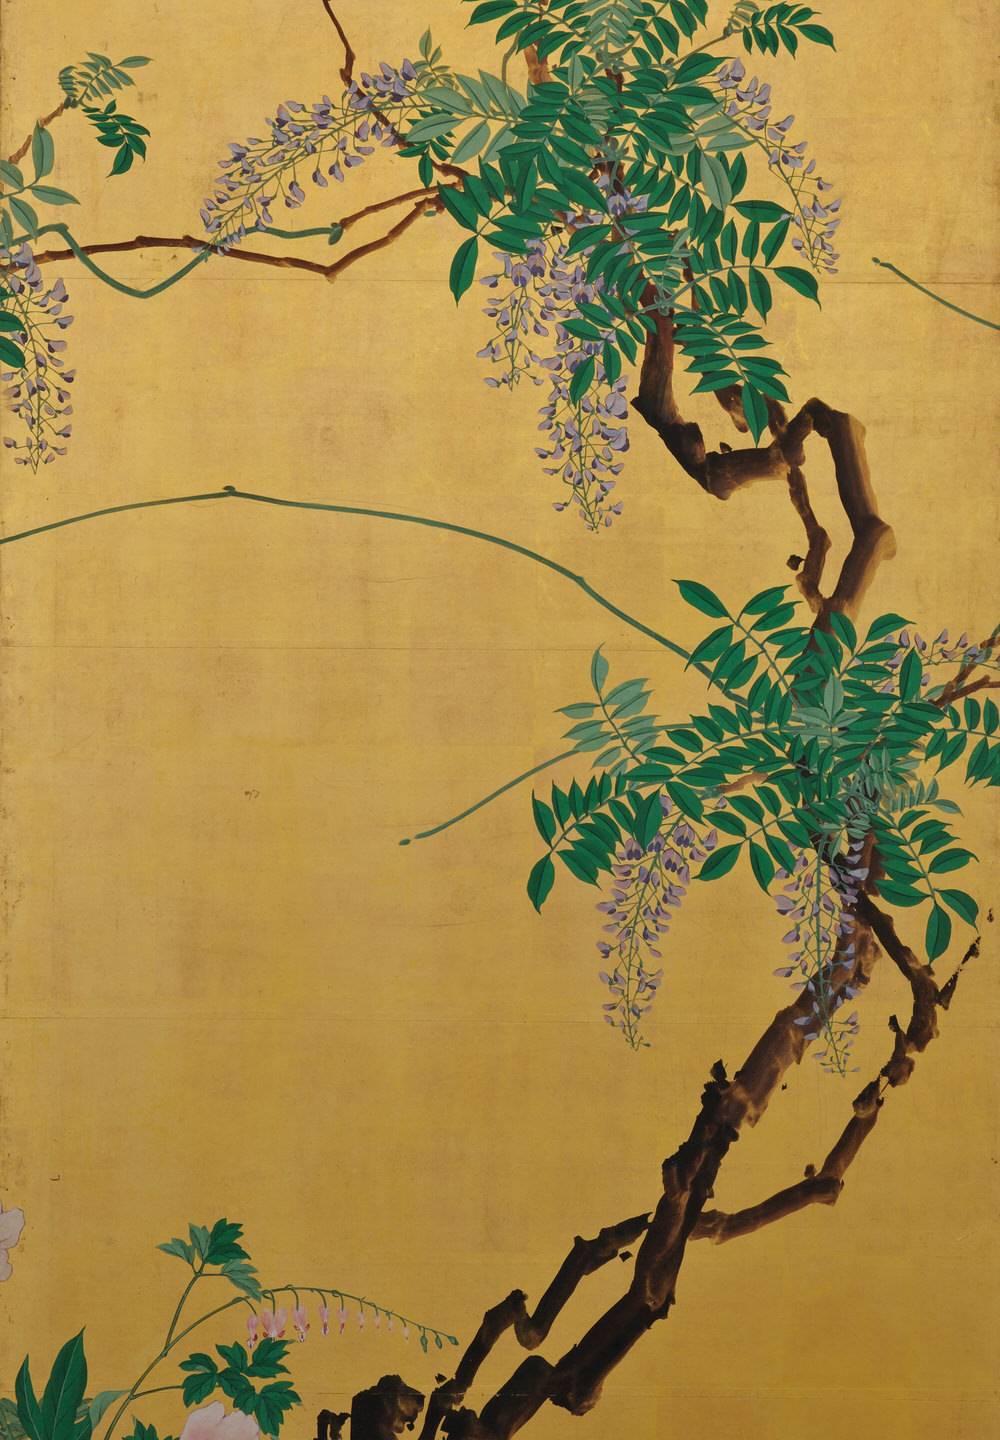 Kishi Ganryo (1798-1852)
“Flowers of the Four Seasons”
Six-panel screen, ink, color and gold leaf on paper.
Inscription: Utanosuke Ganryo
Artist seals:
Ganryo no in
Shiryo
Dimensions:
170 cm x 556 cm (67” x 219”)

Flowers and plants have